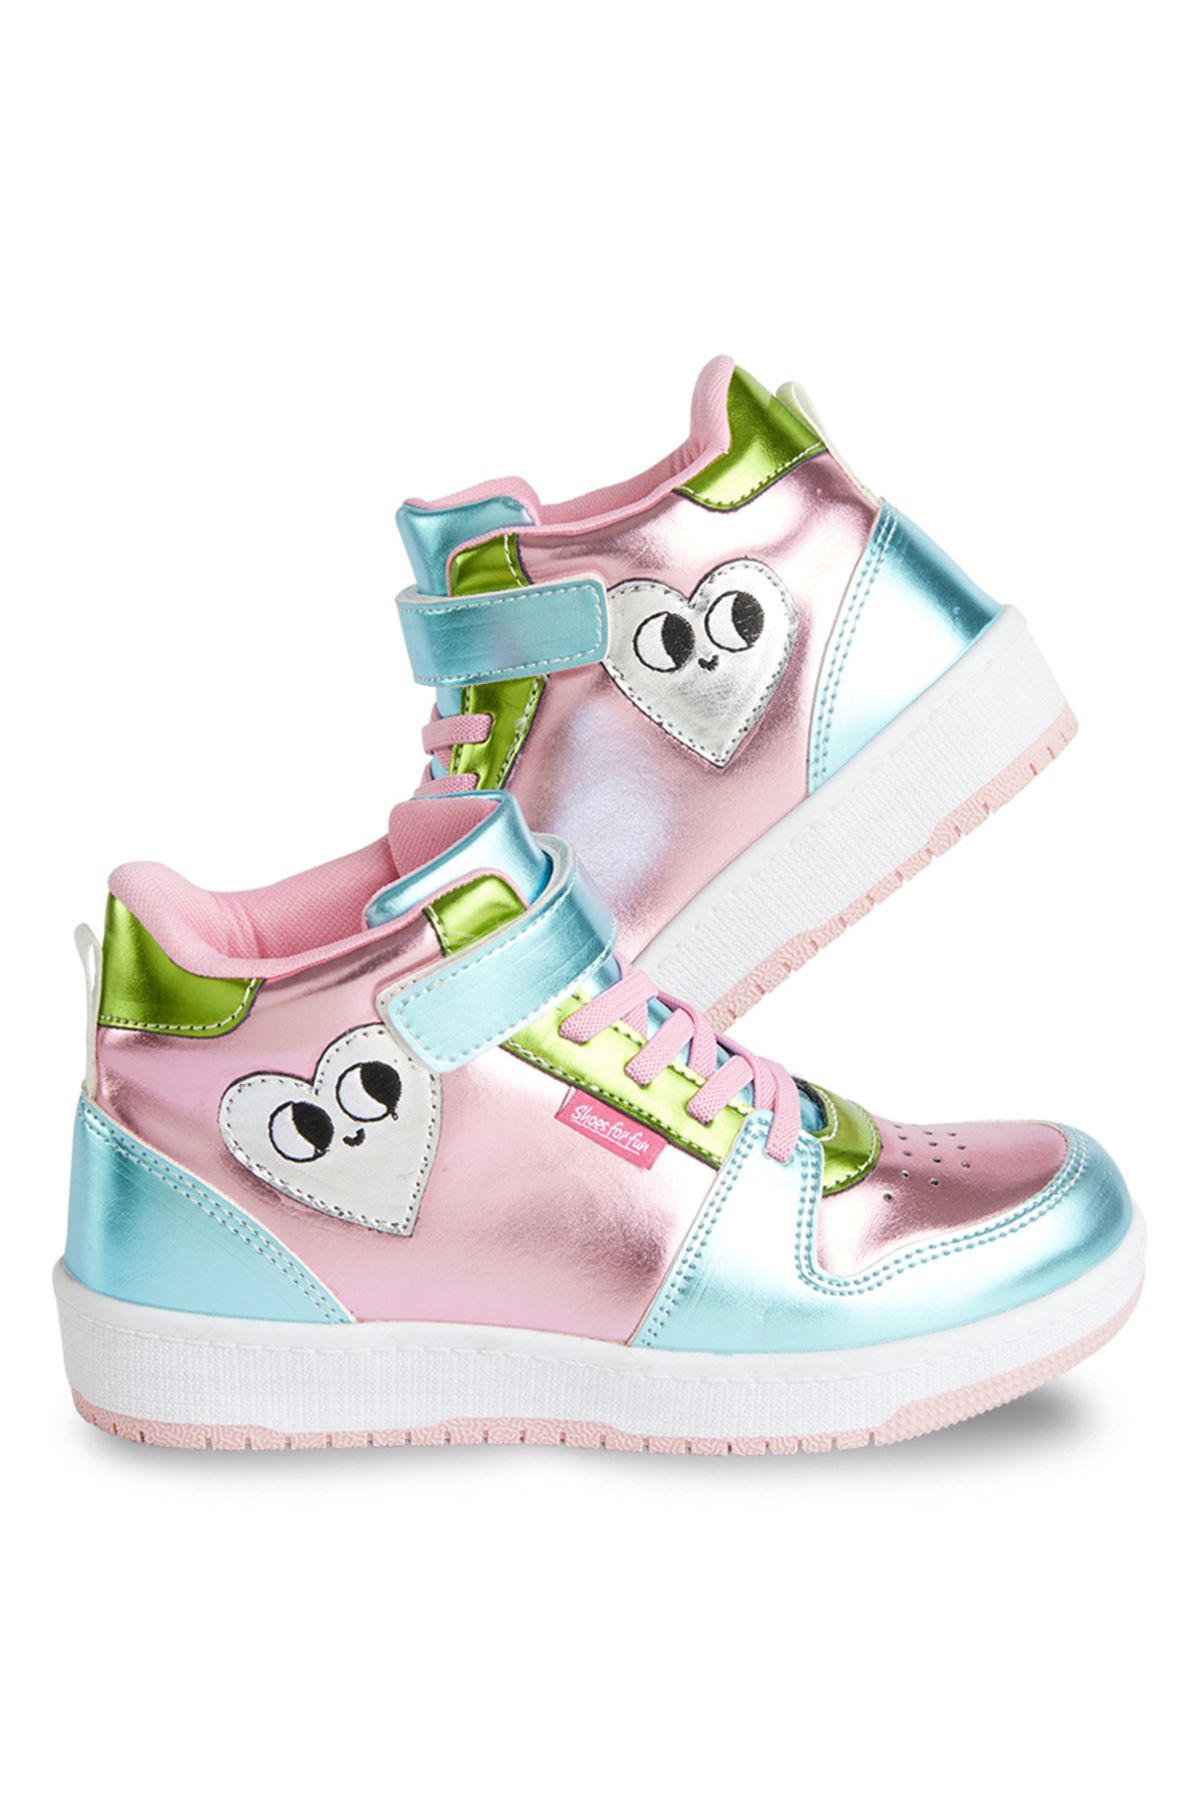 Denokids Hologram Kız Çocuk Pembe Sneakers Spor Ayakkabı